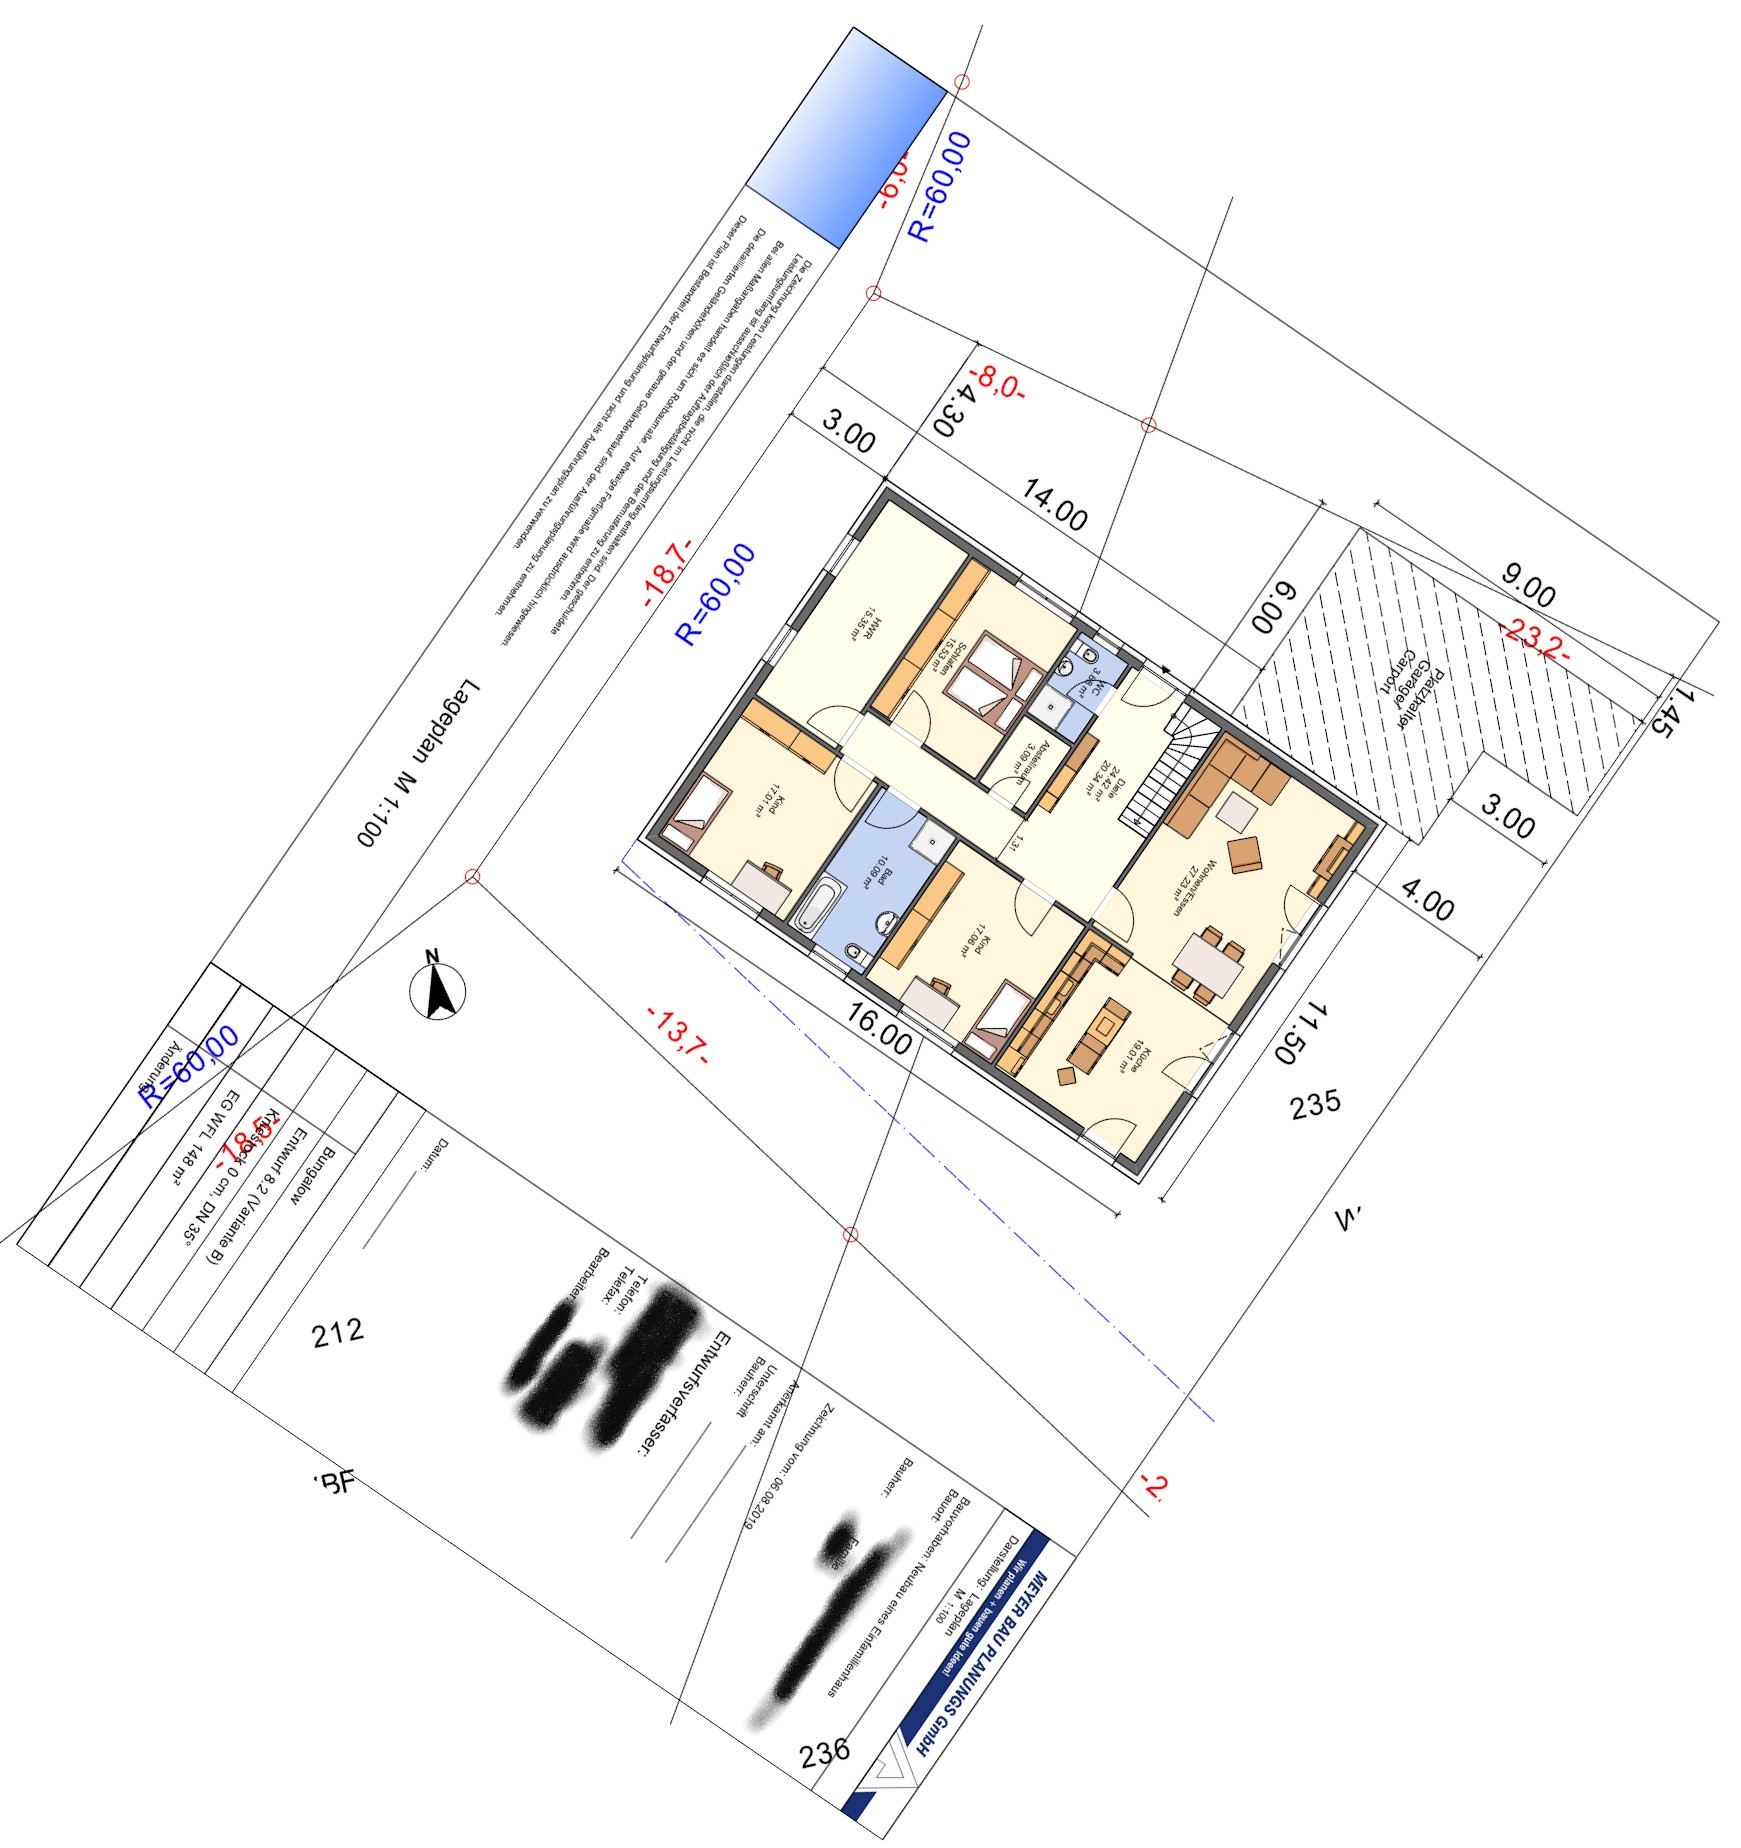 bungalow-148m-grundstuecksplanung-grundrissplanung-340231-4.jpg